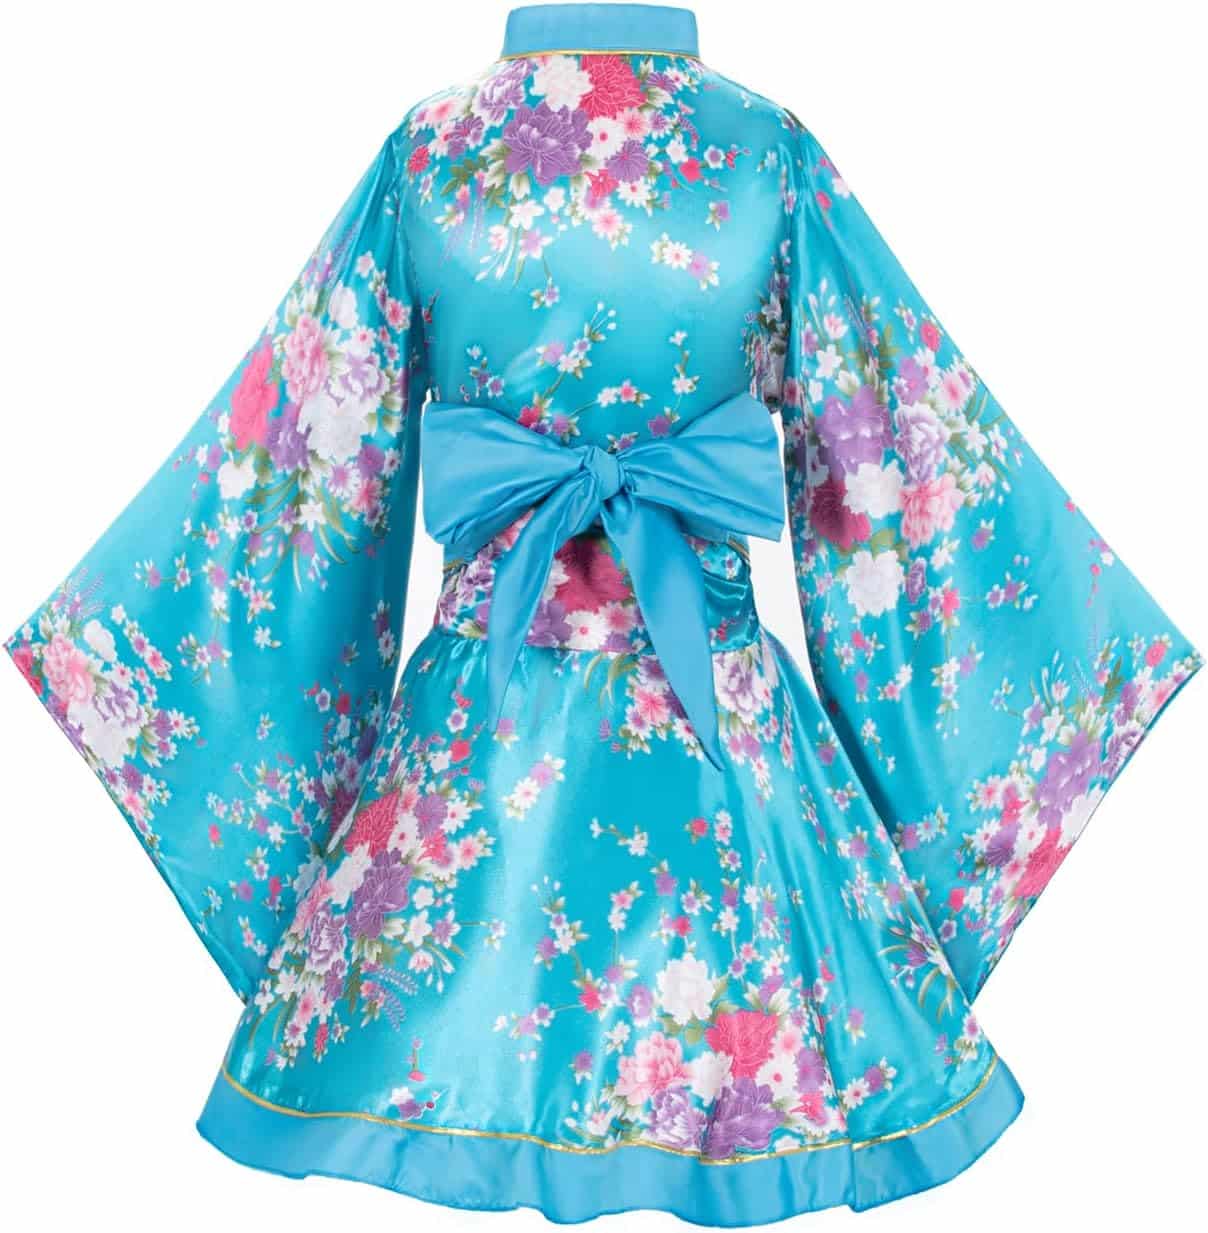 Elibelle Japanese Anime Women's Dance Kimono Robe: A Review